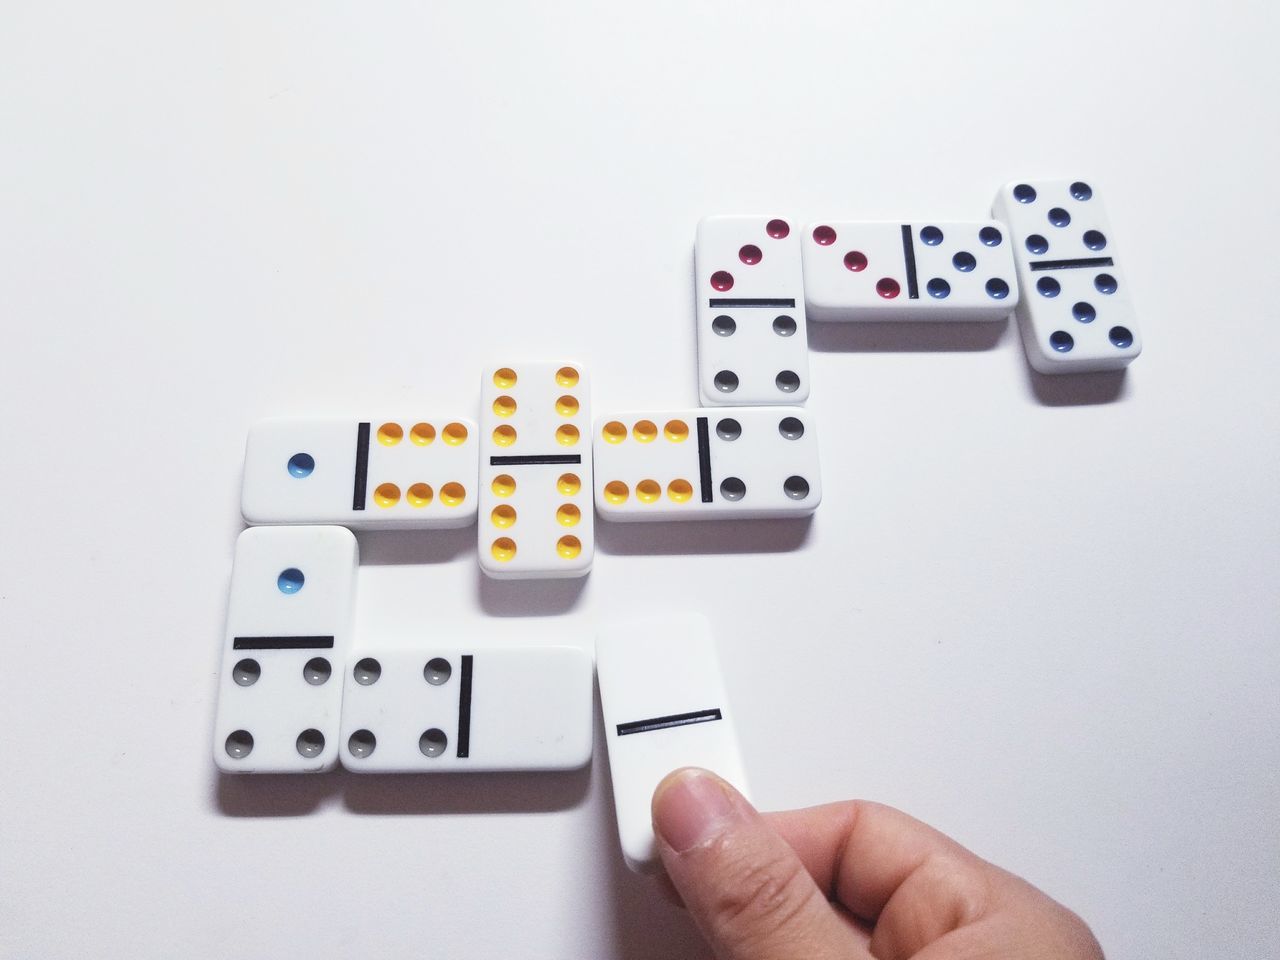 Dominoe pieces